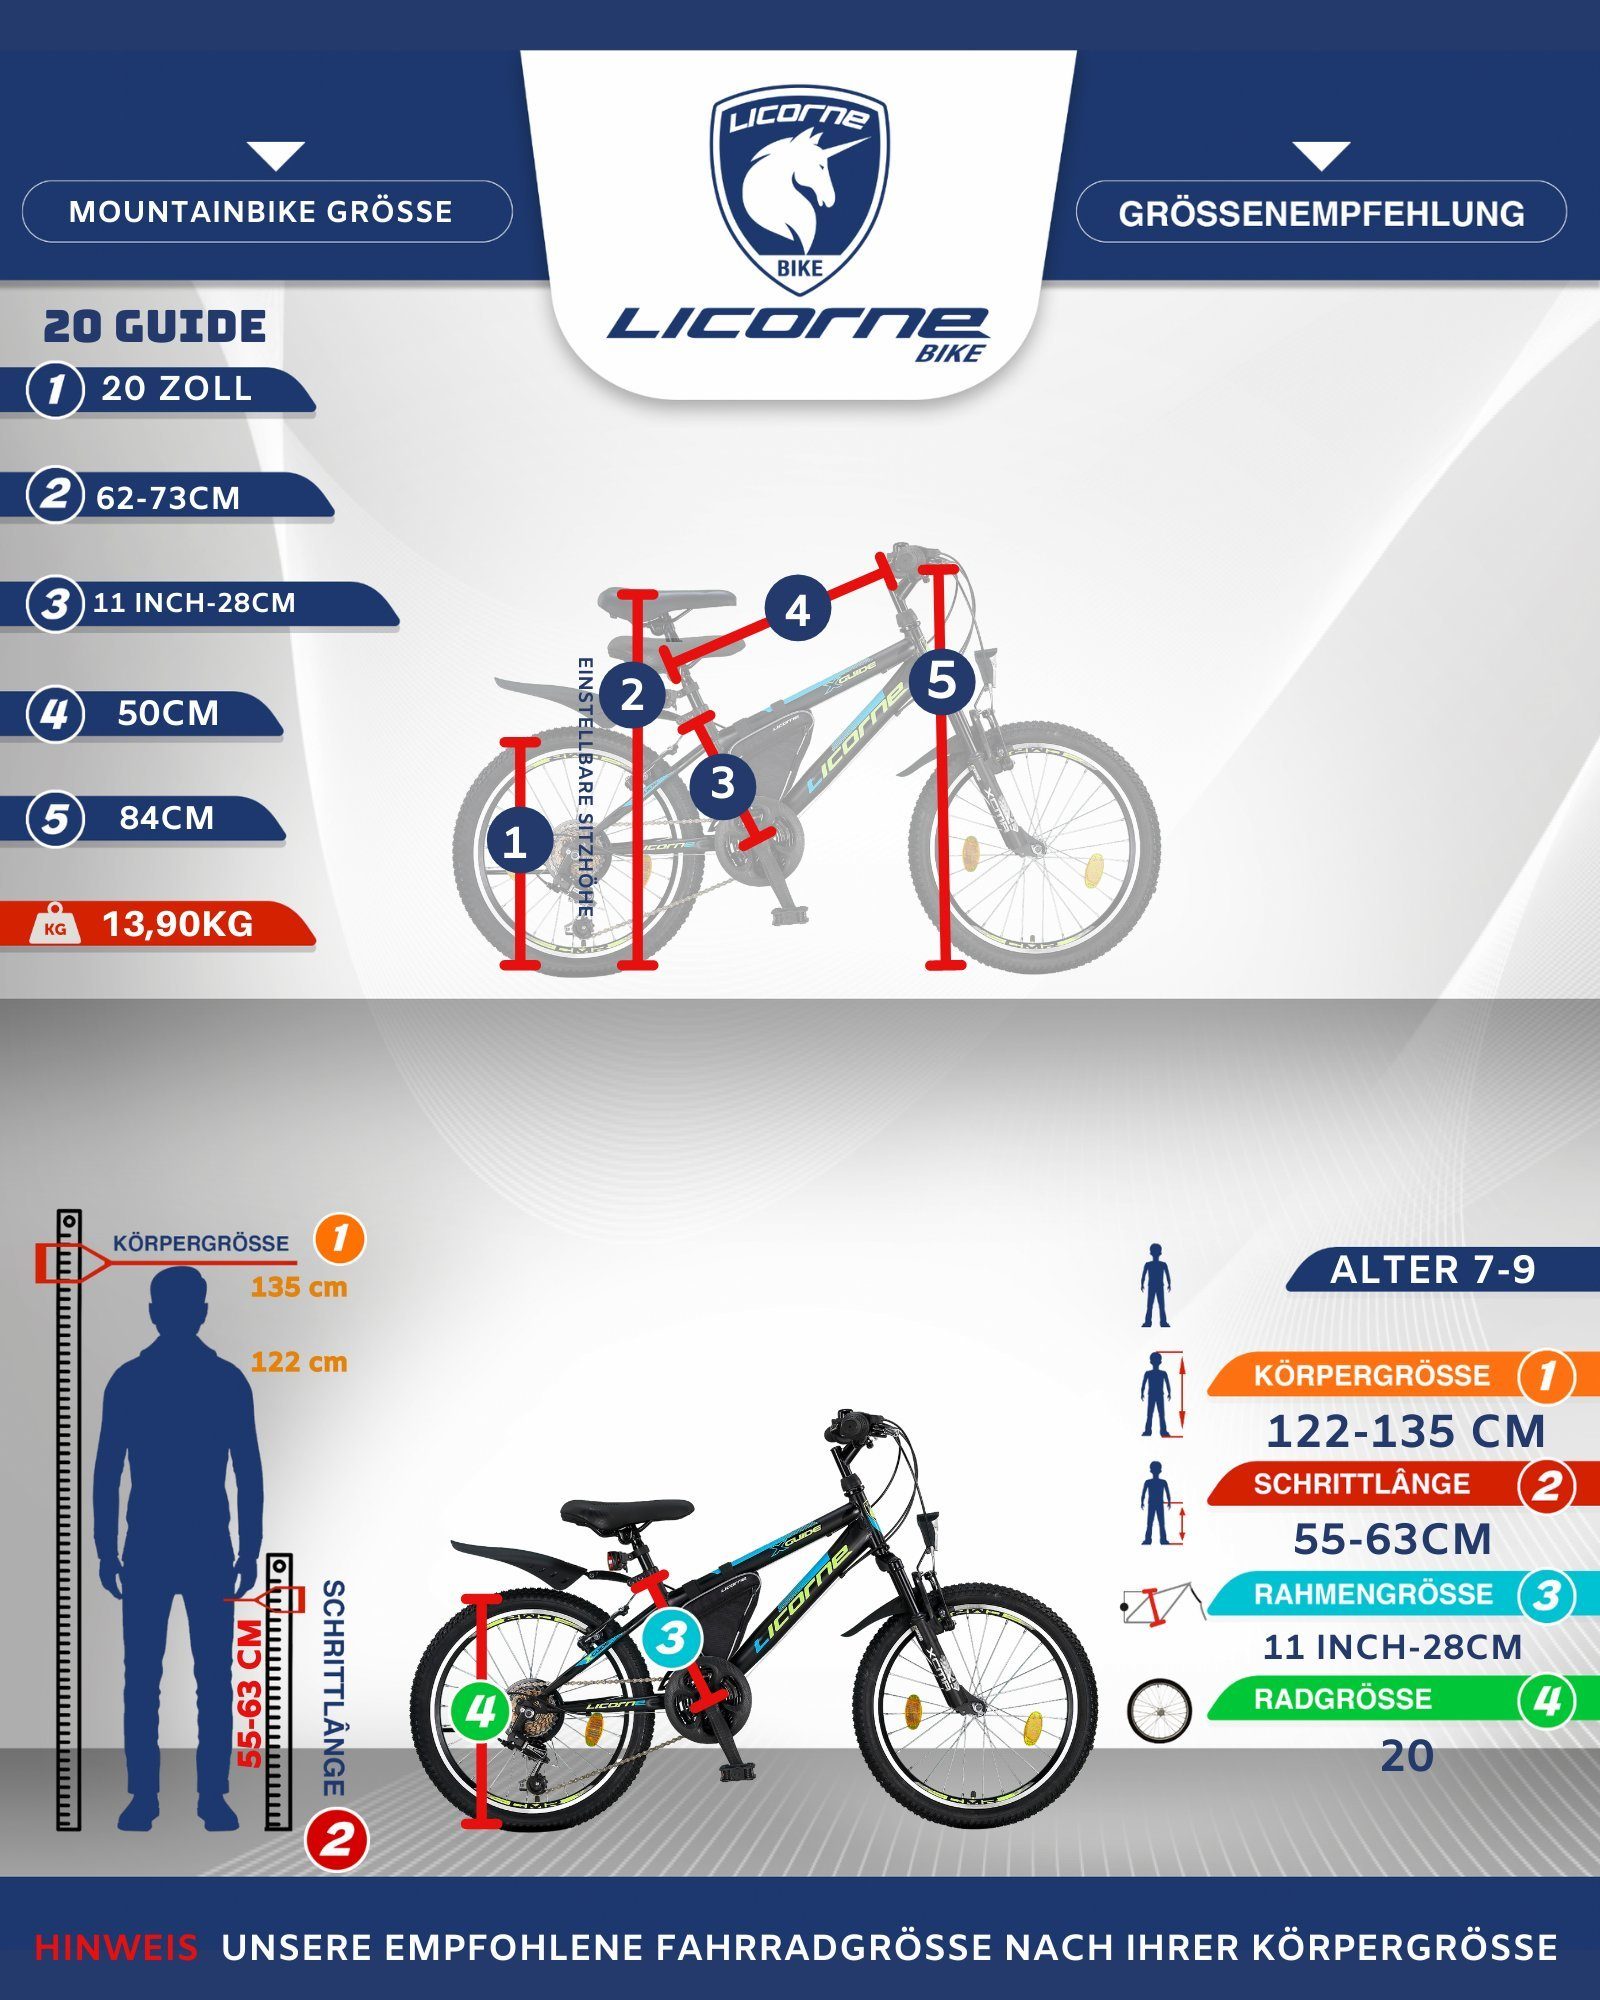 Premium Bike Mountainbike Licorne in 24 und Zoll Schwarz/Rot/Grau Guide 26 Licorne 20, Bike Mountainbike